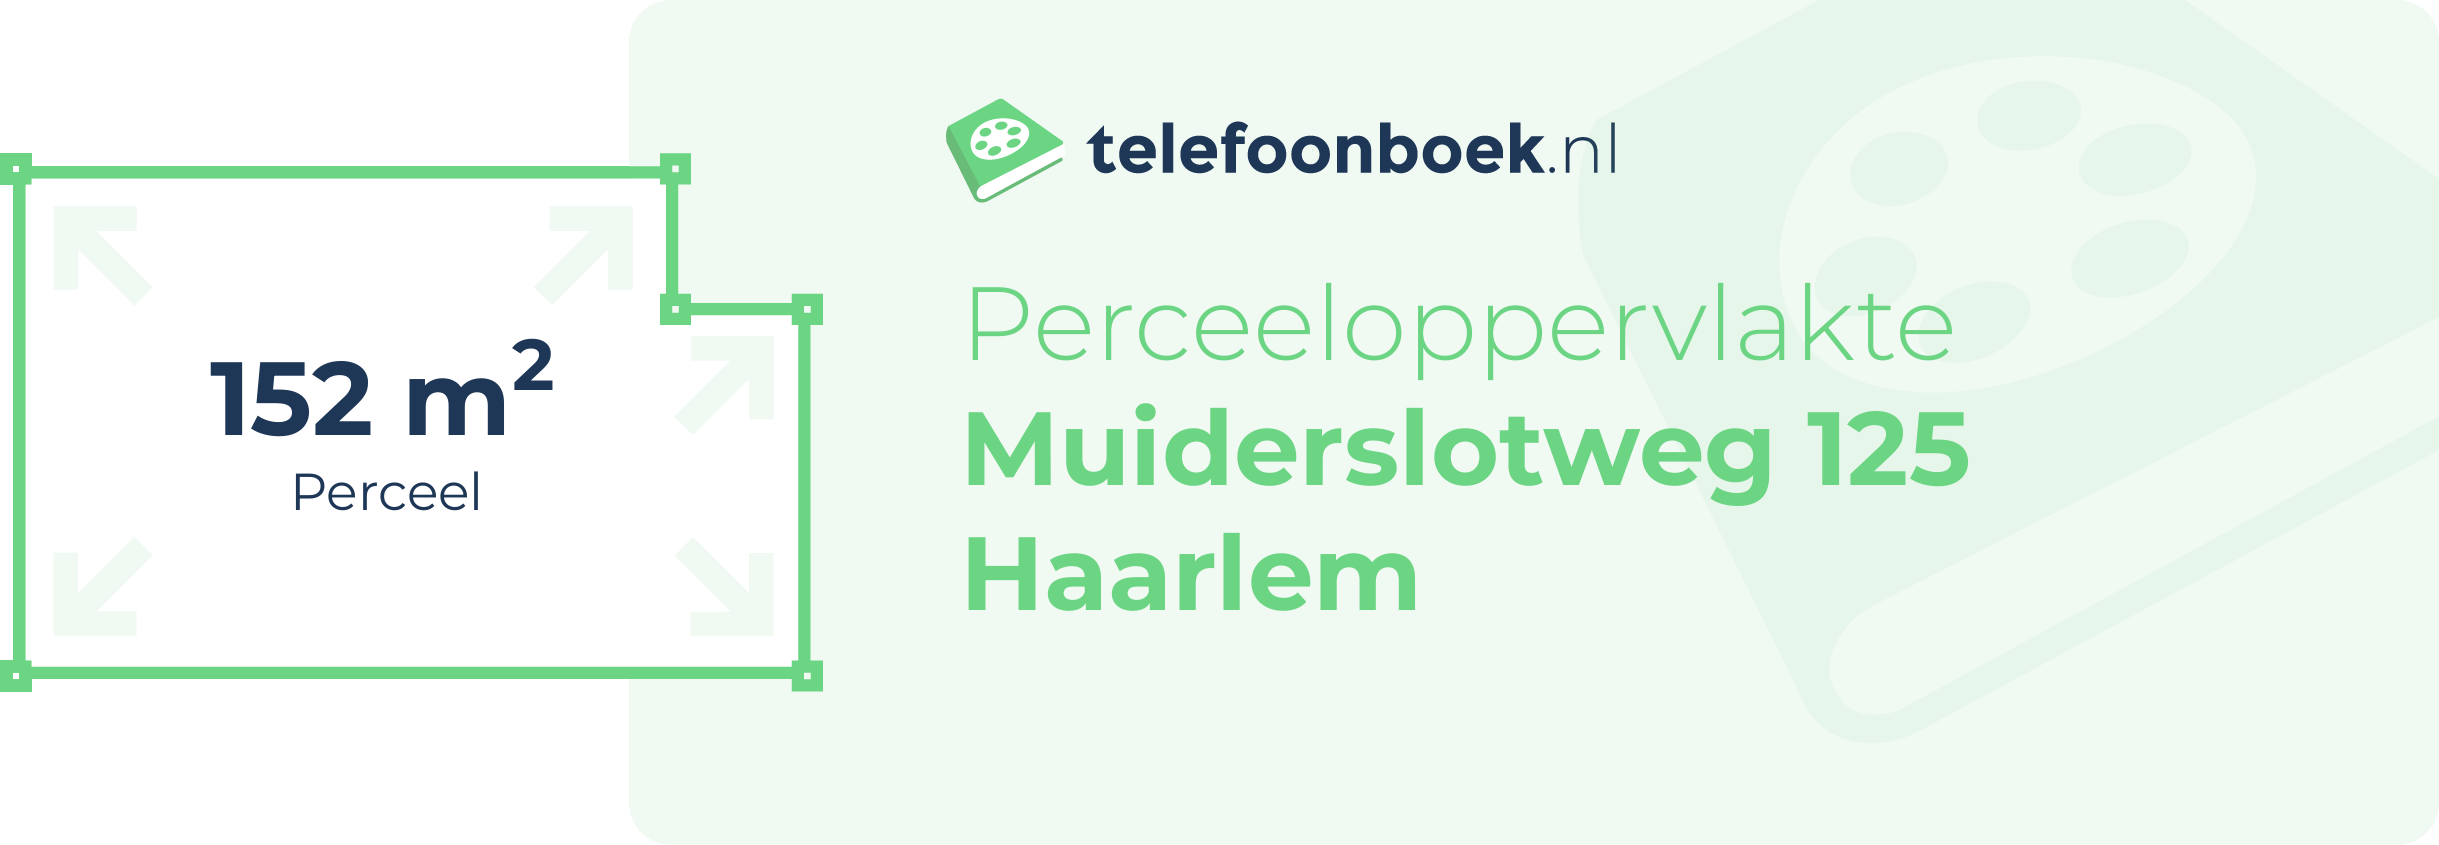 Perceeloppervlakte Muiderslotweg 125 Haarlem